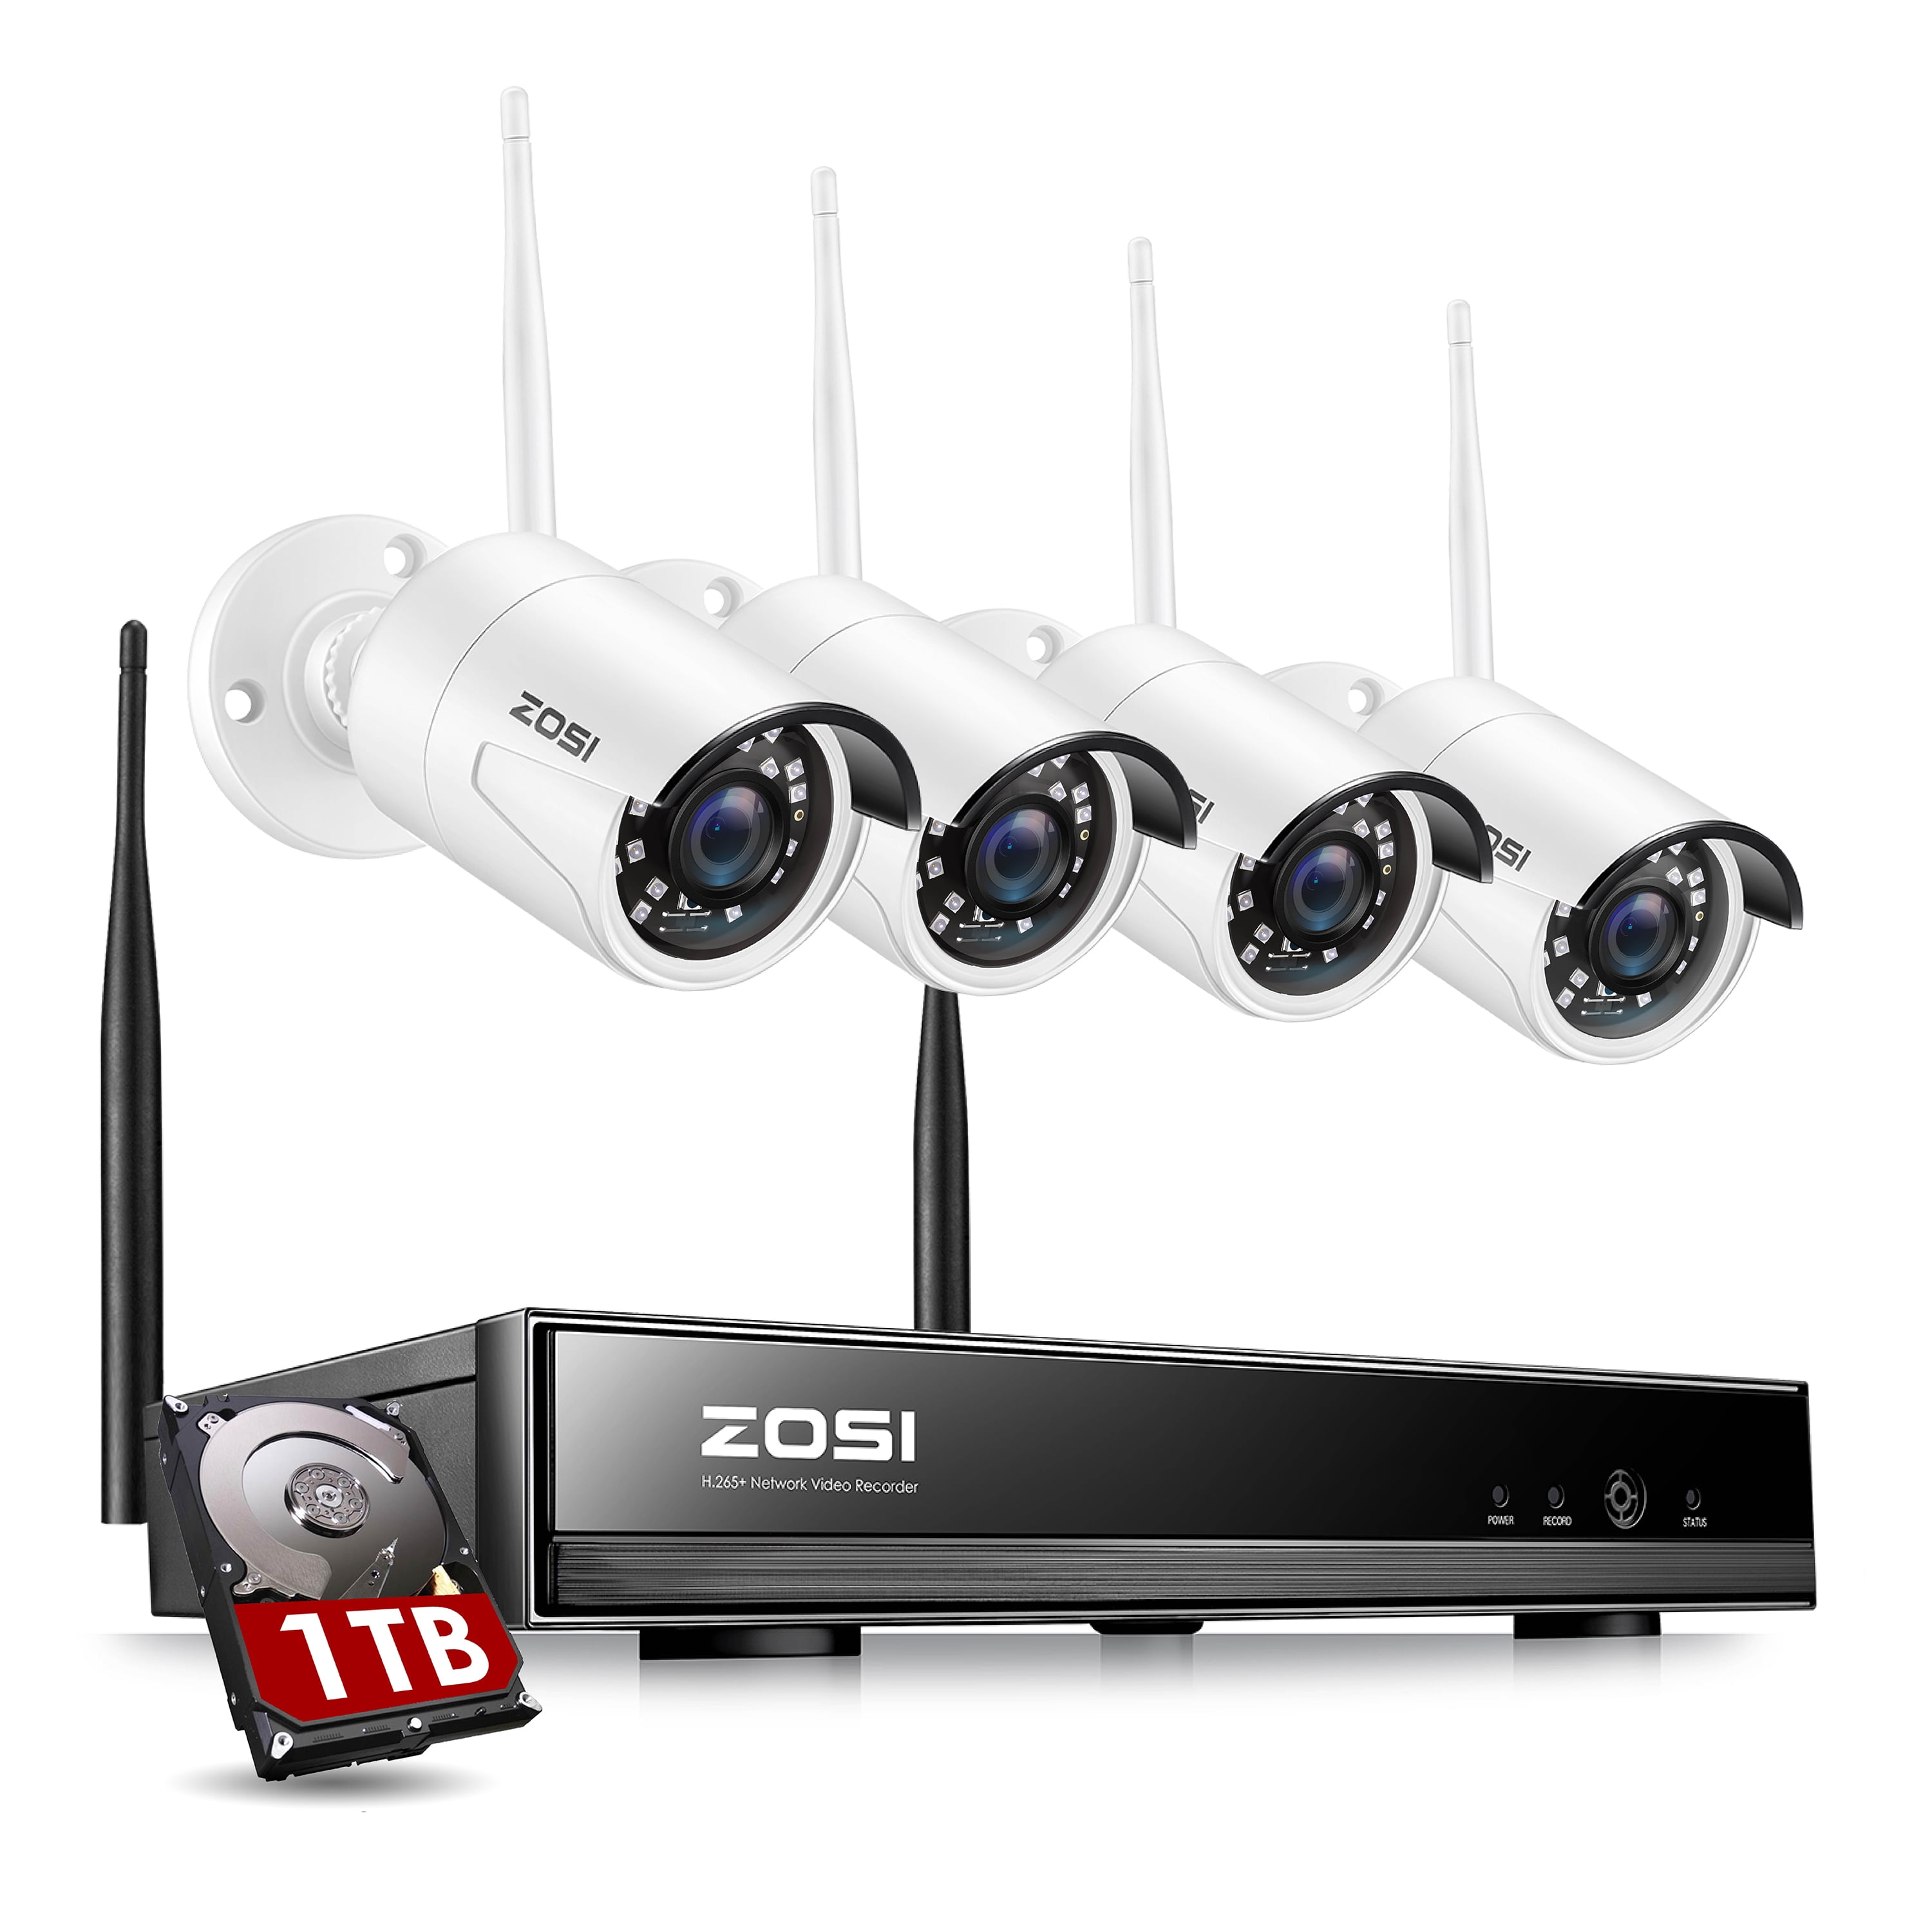 ZOSI CCTV 1080P Security Camera System 8CH 4CH HD DVR Home Surveillance Outdoor 